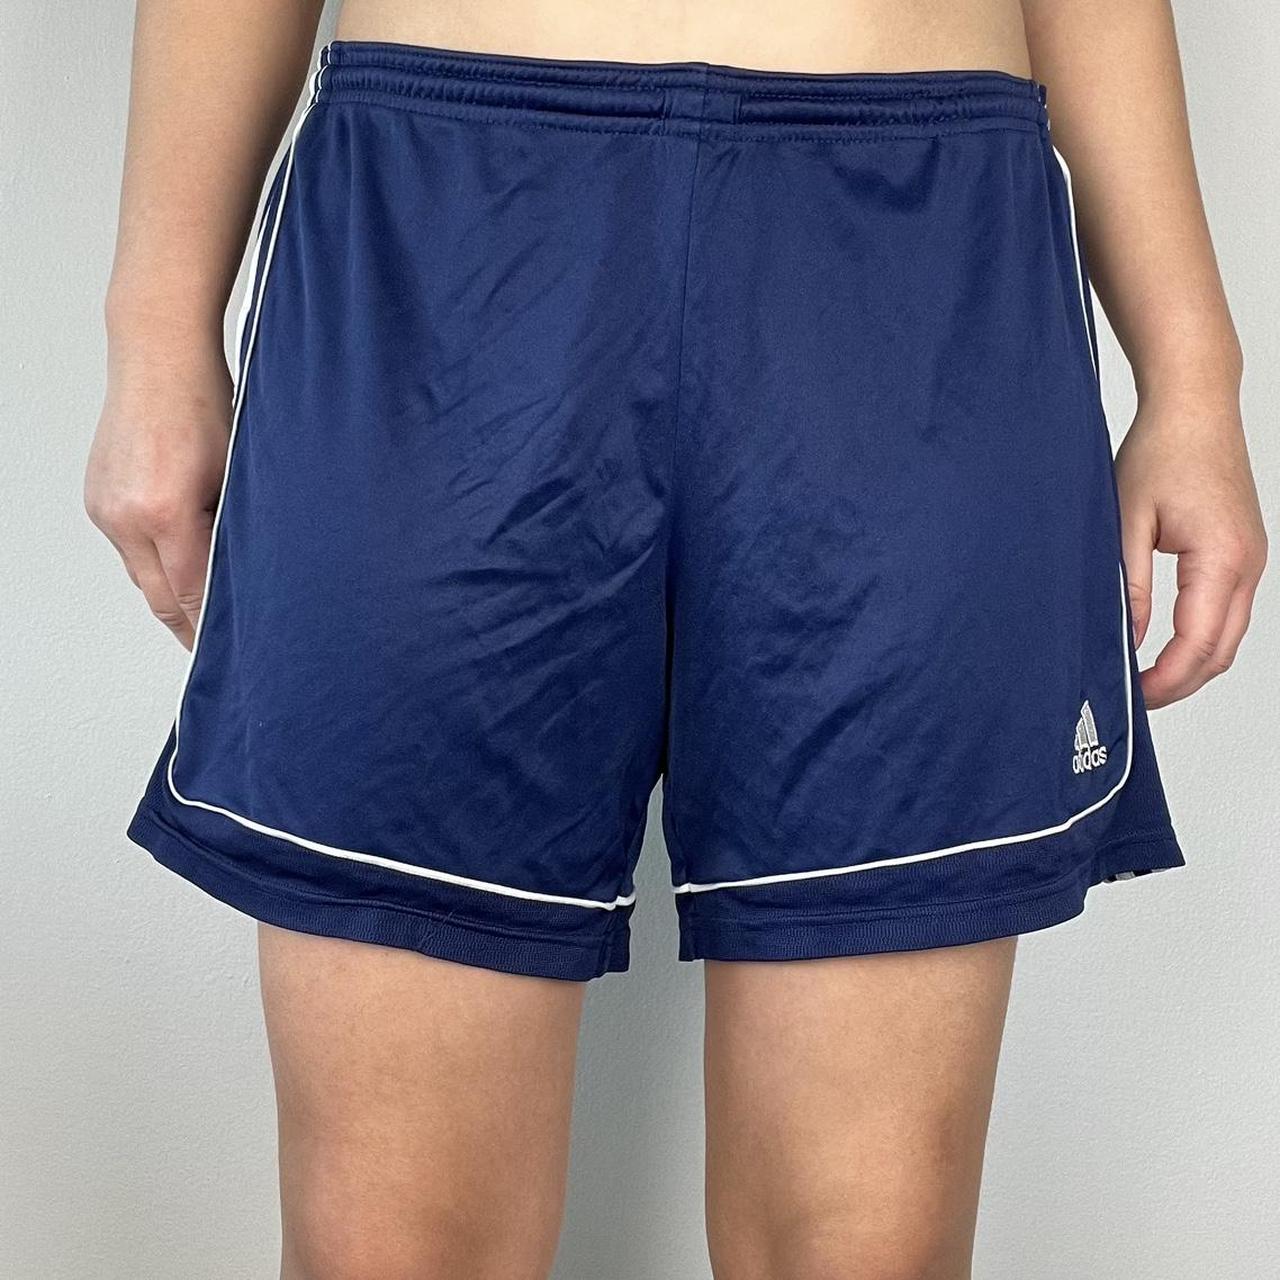 These Adidas shorts have built in underwear - Depop